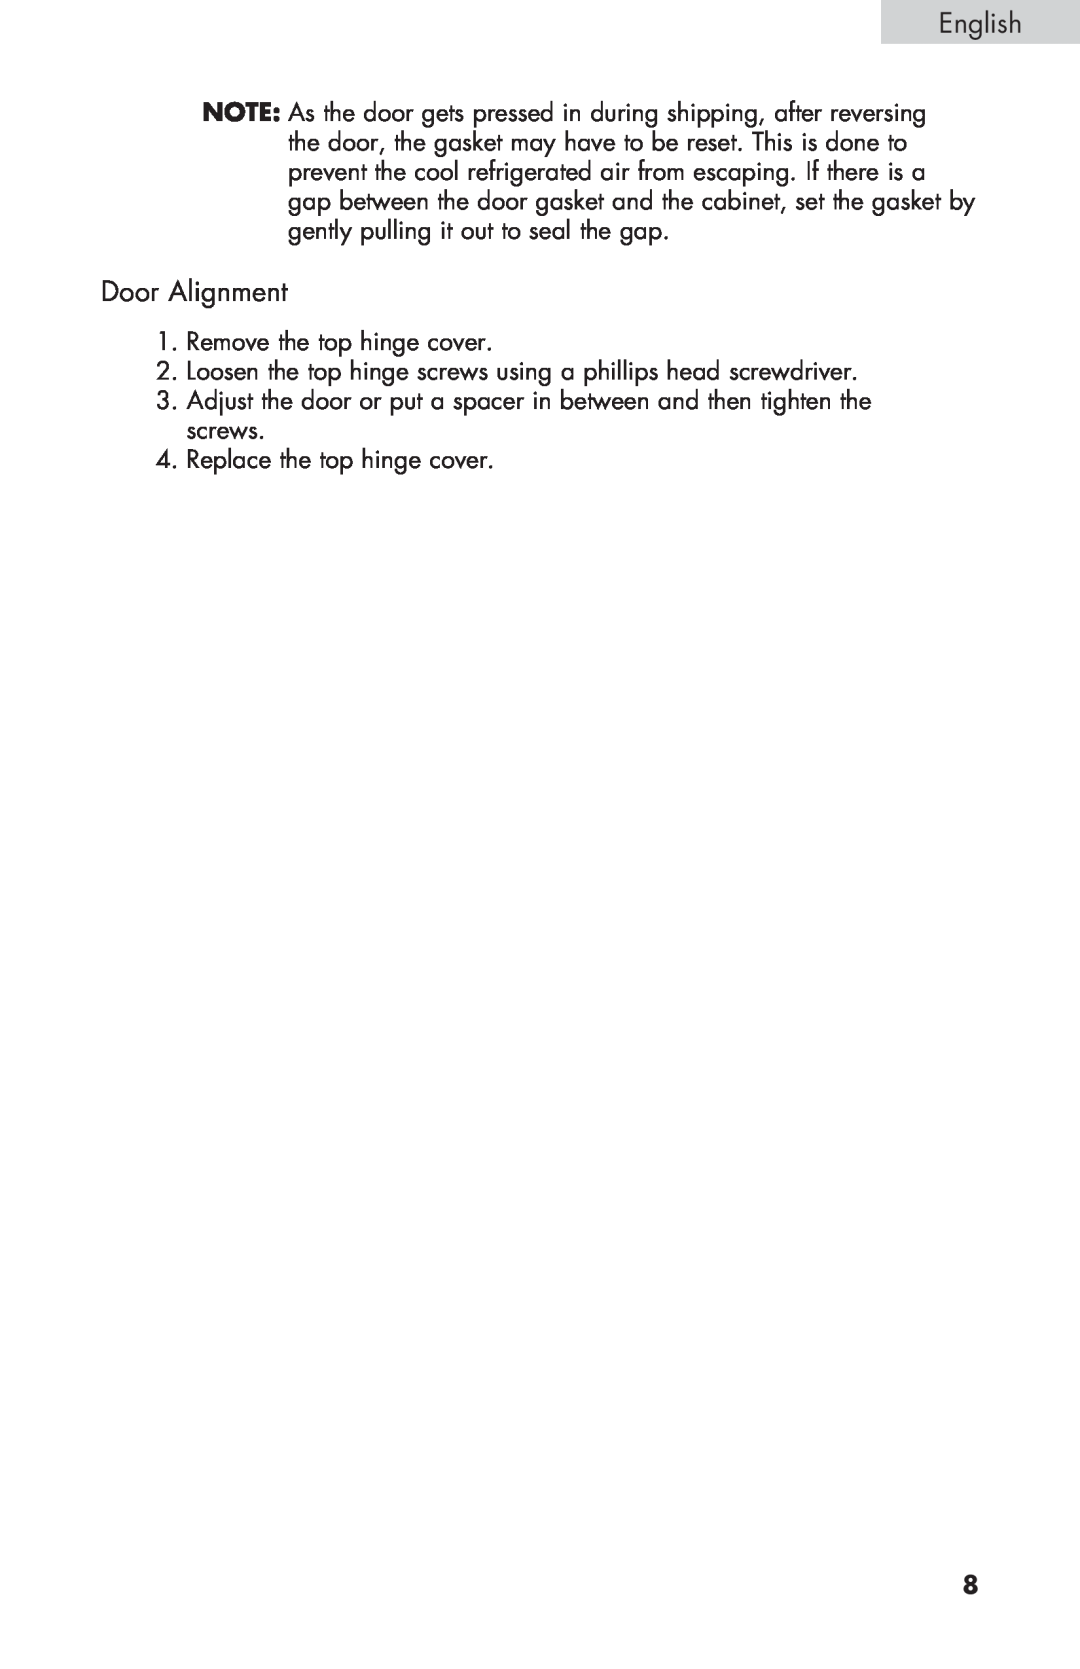 Haier HNSE032, COMPACT REFRIGERATOR manual English, Door Alignment 